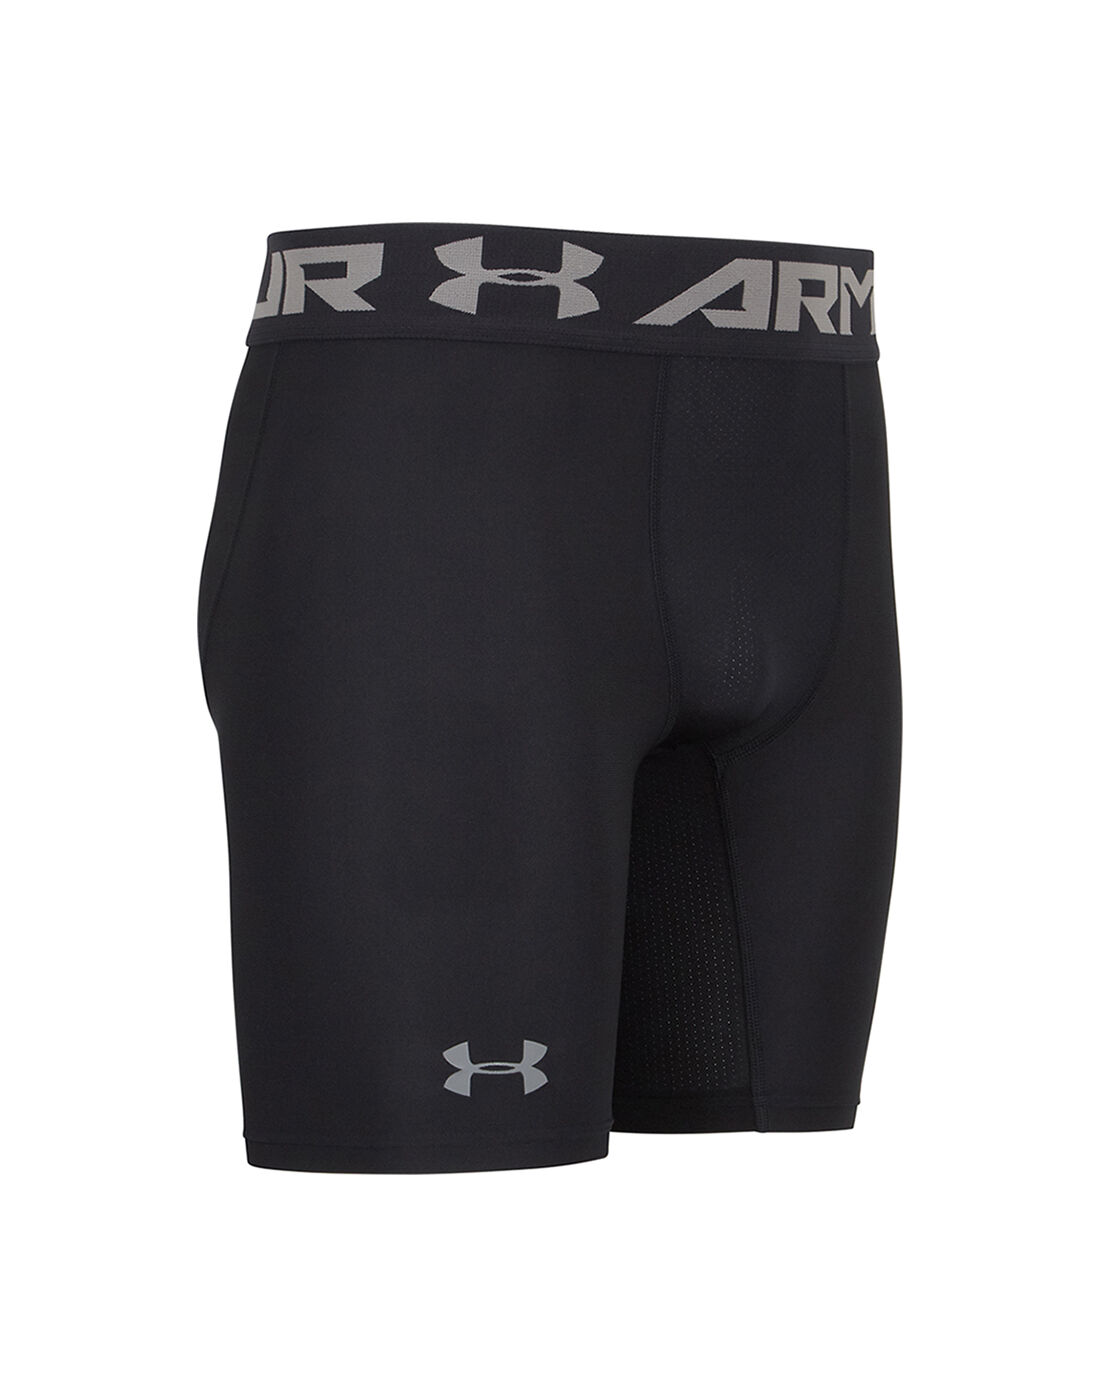 Men's Under Armour Heatgear Shorts 